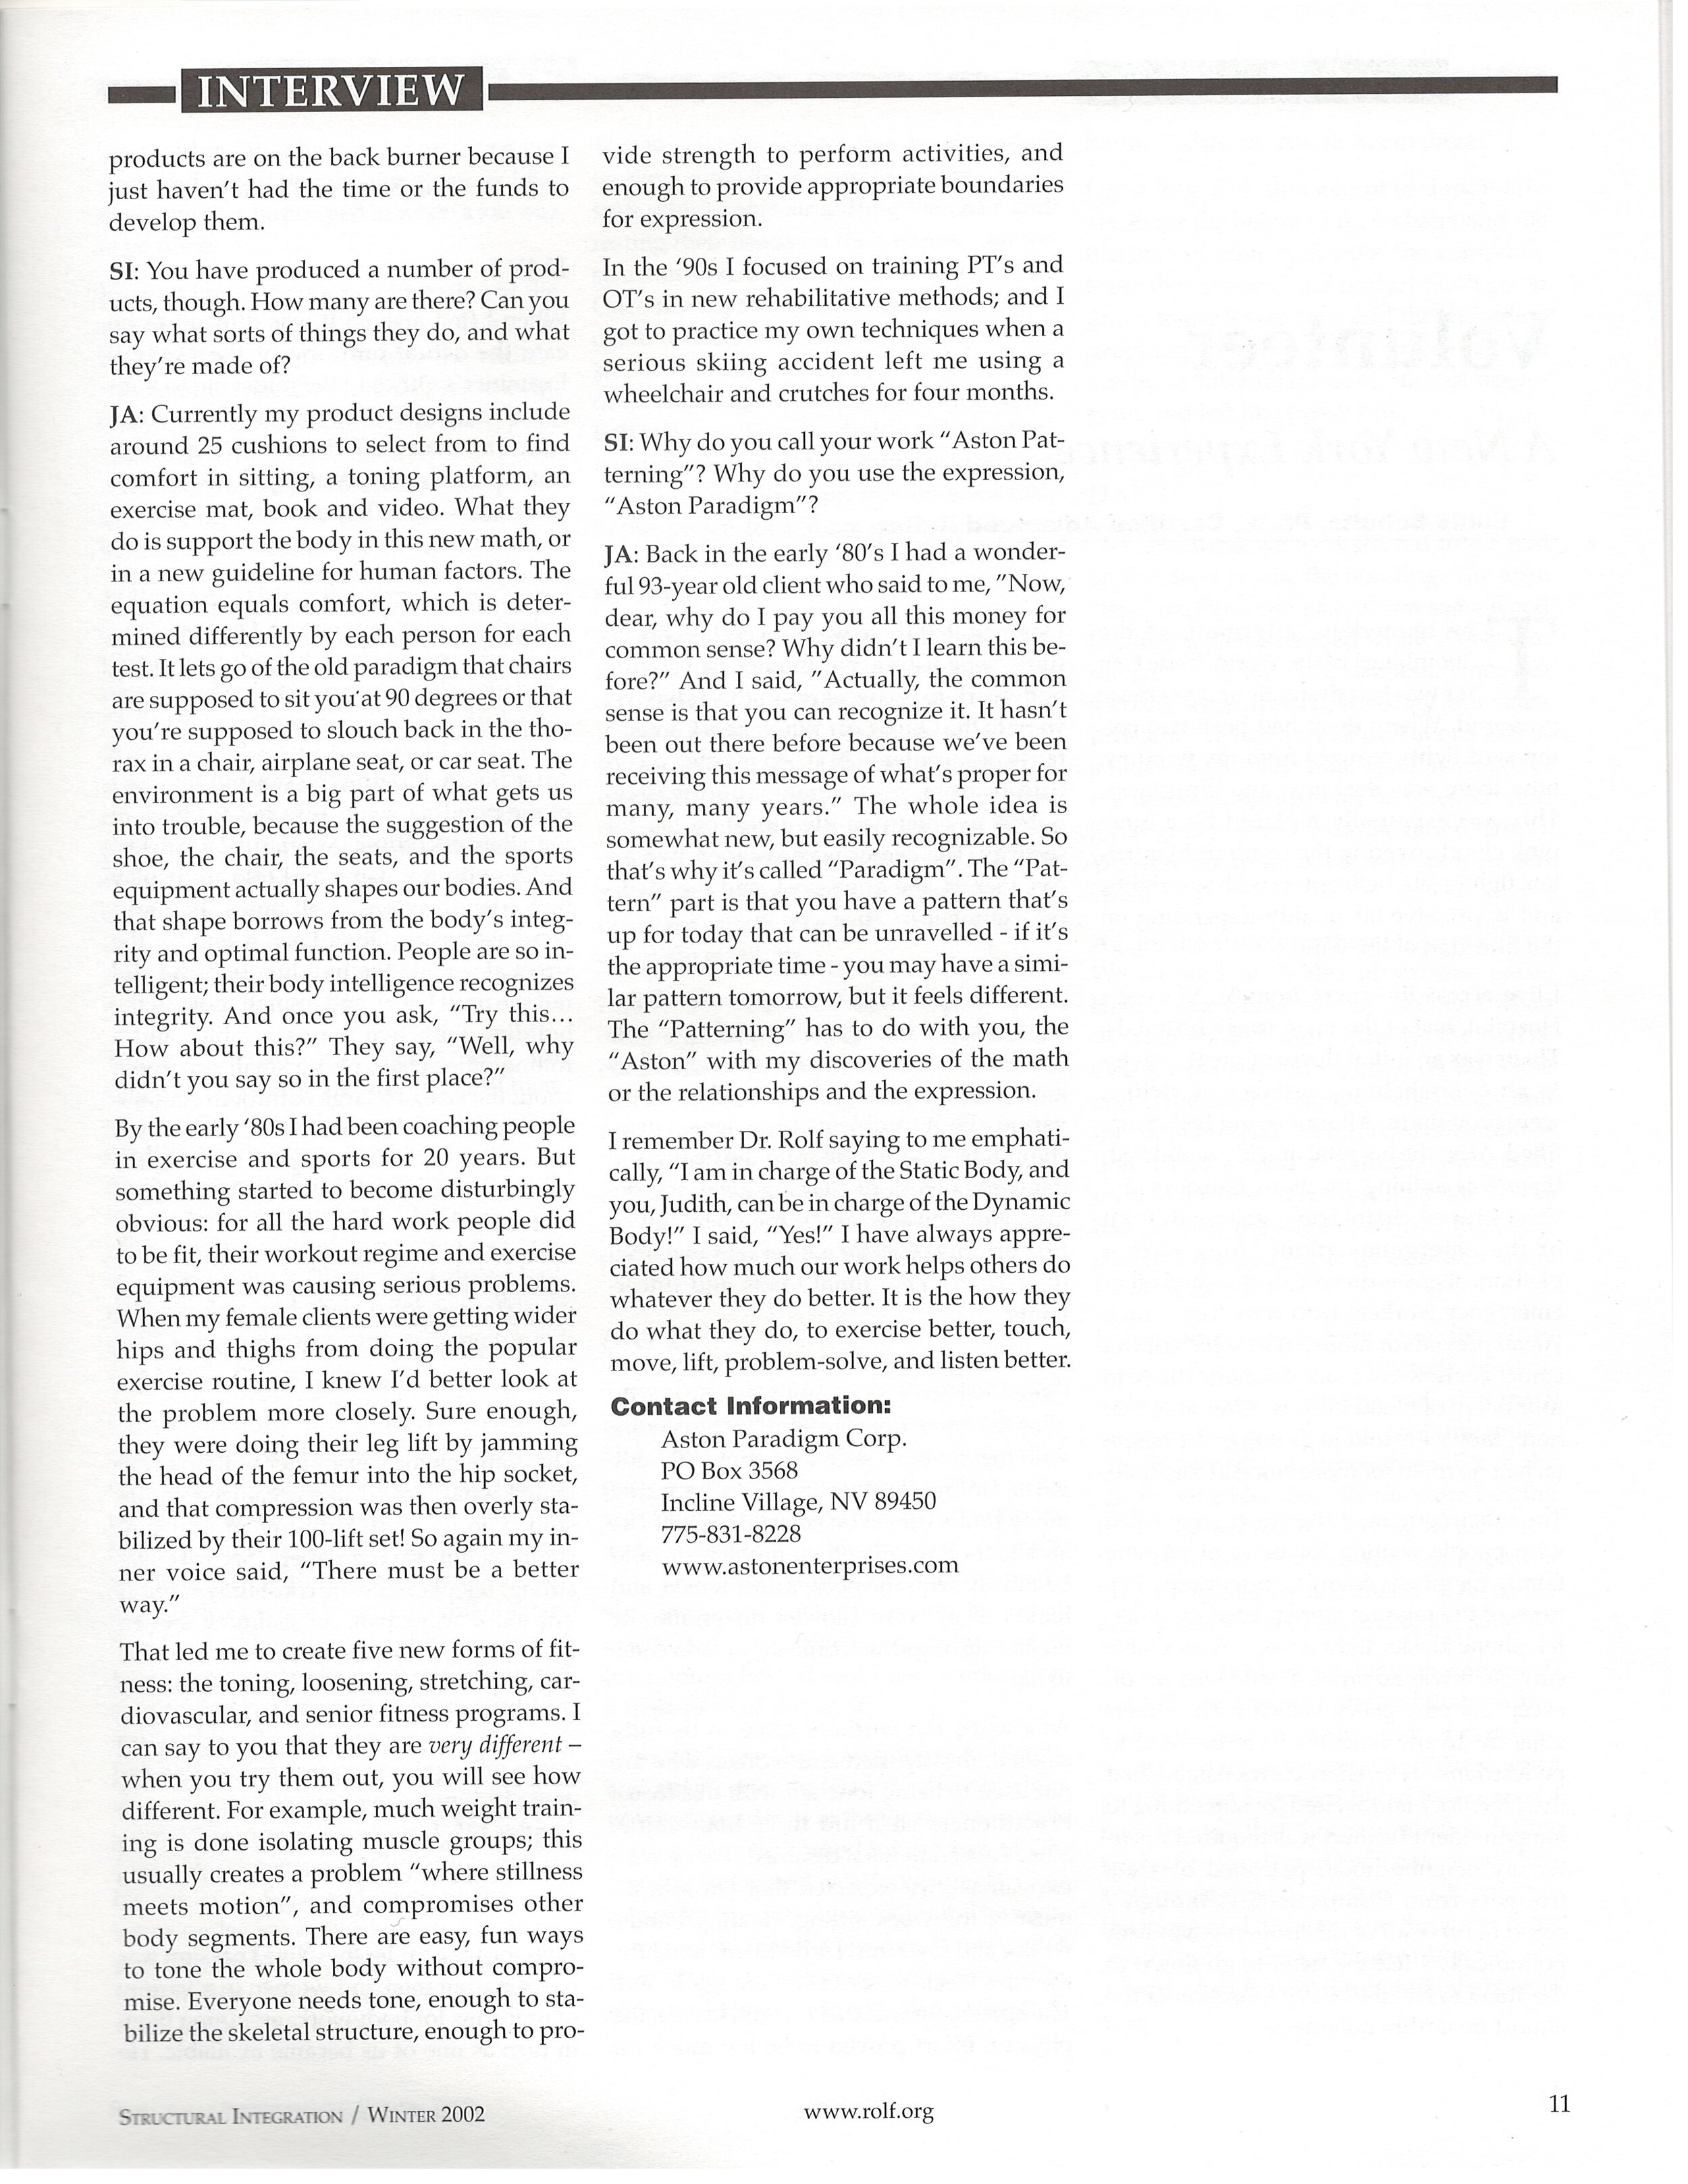 SI Journal of Rolf Institute 2002.4.jpg